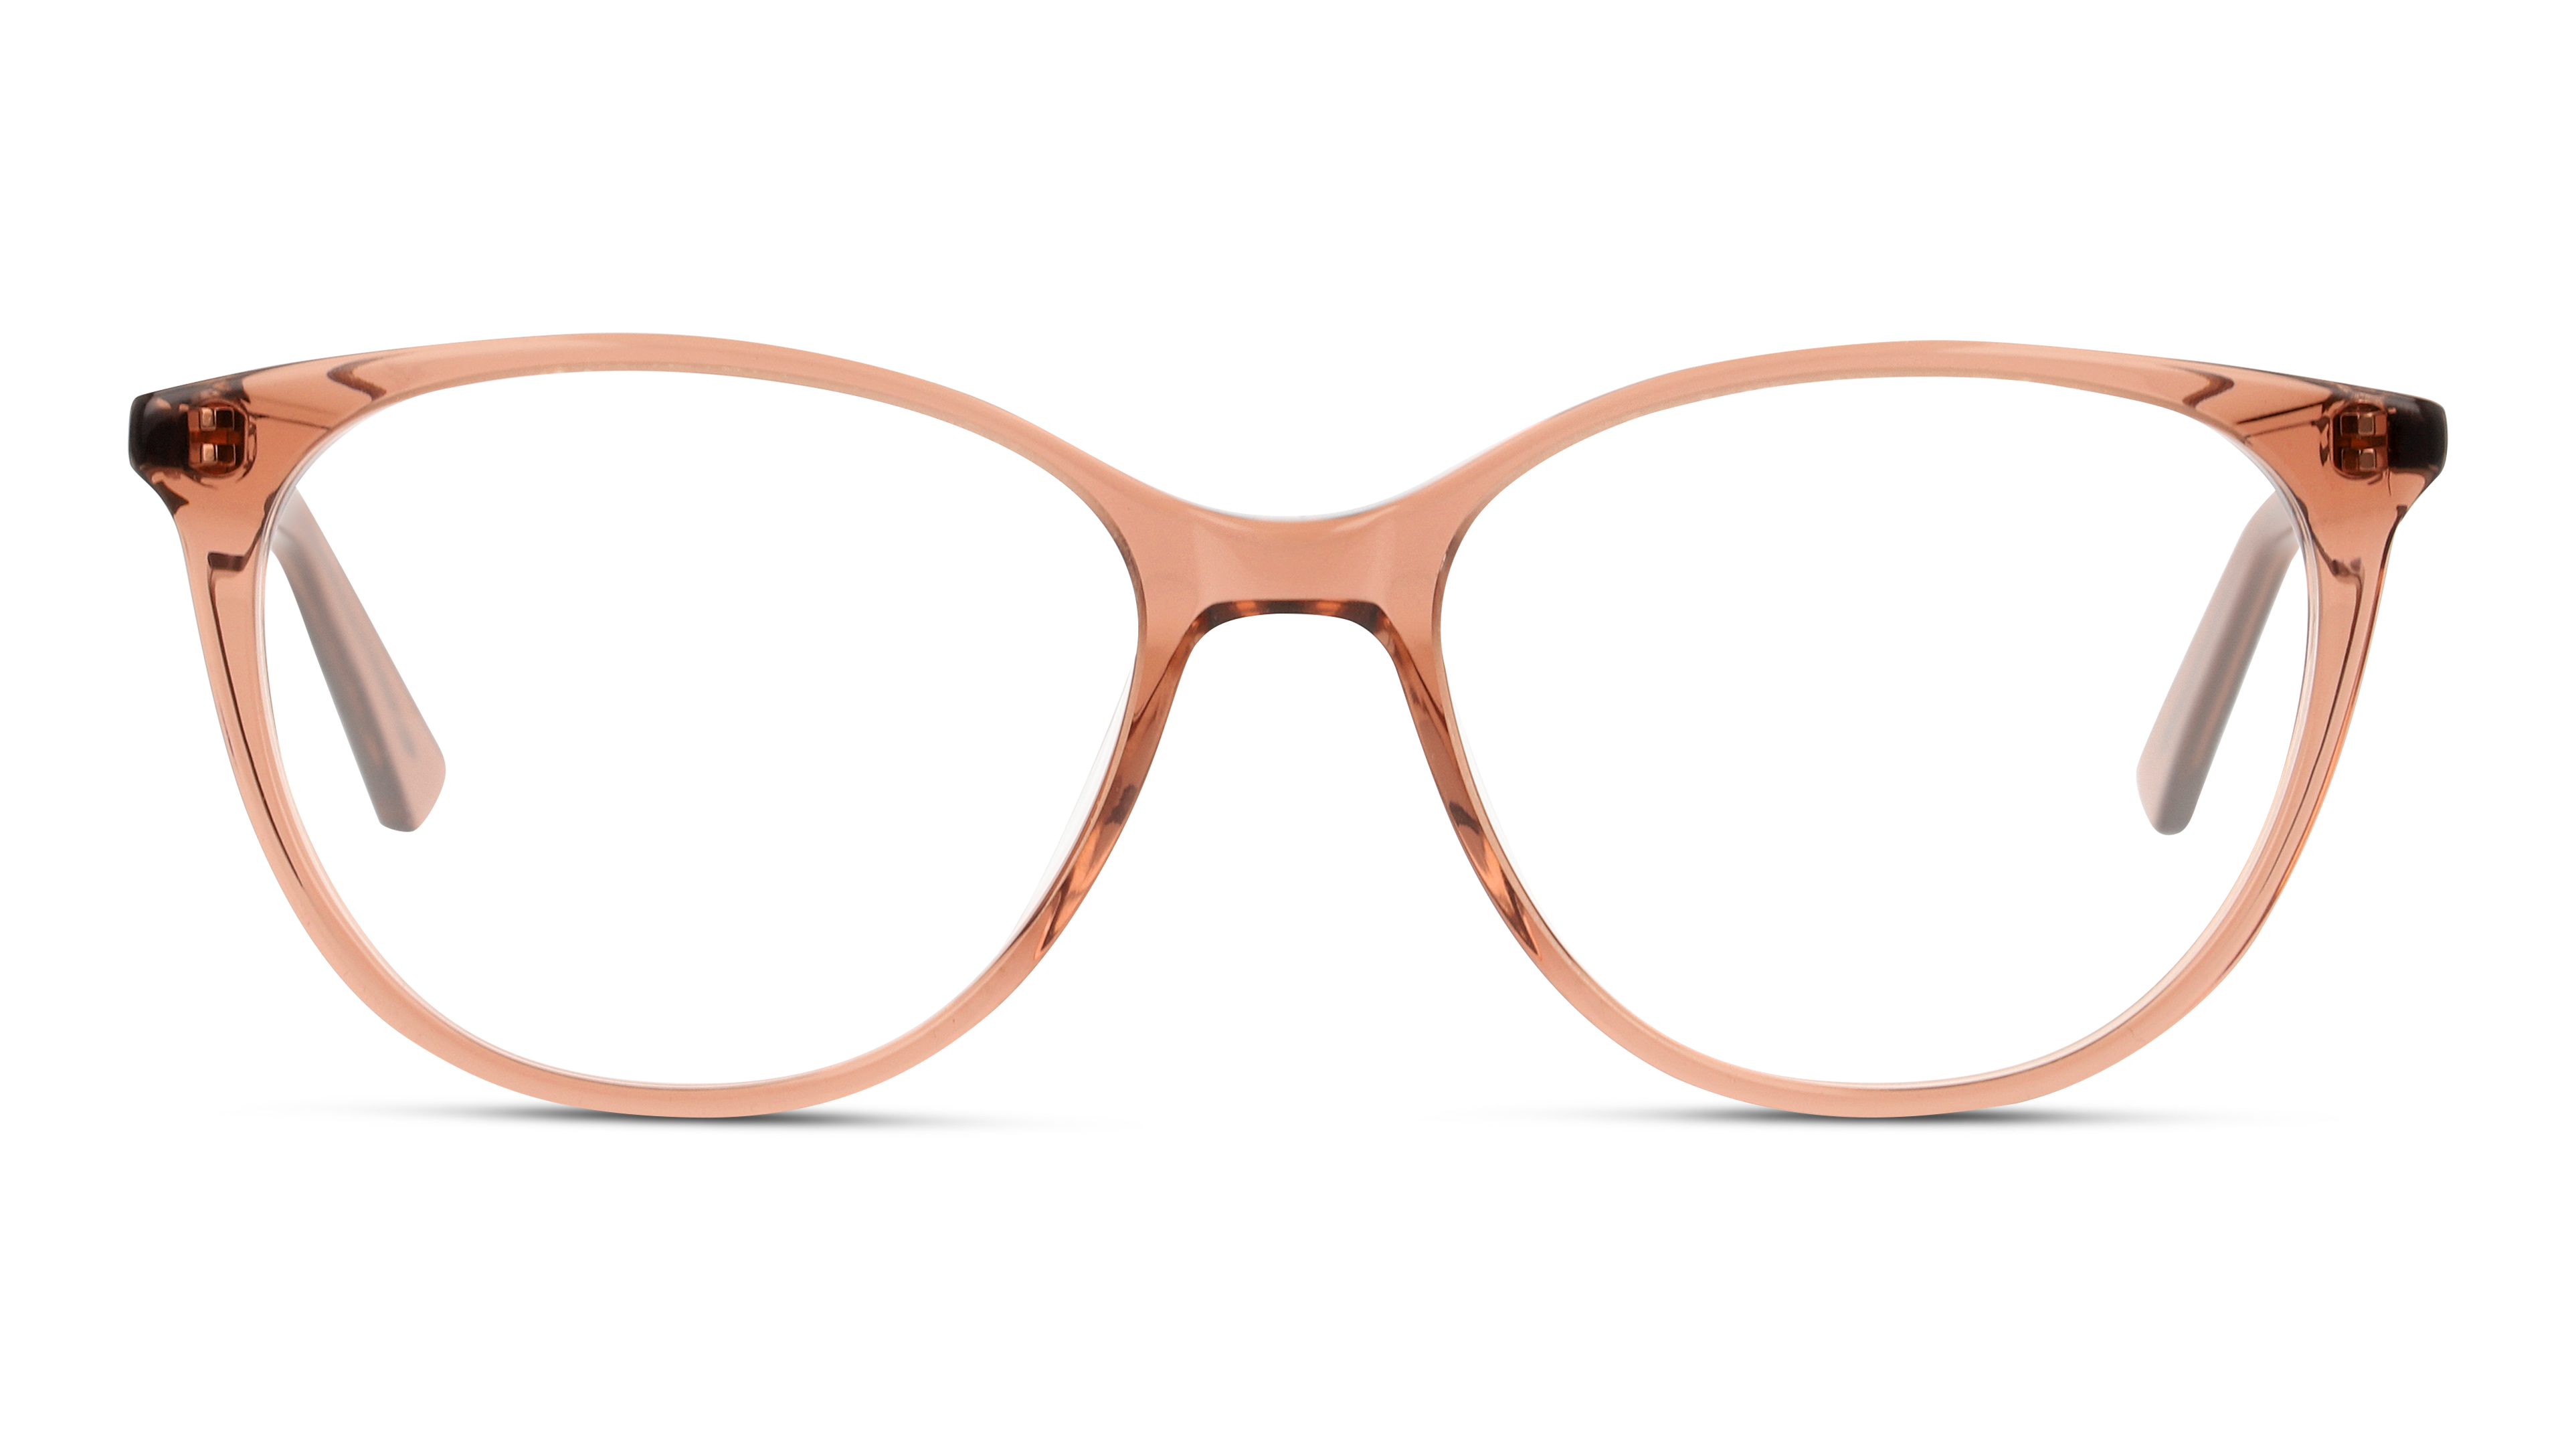 Front Unofficial UNOF0289 Glasses Transparent / Transparent, Pink